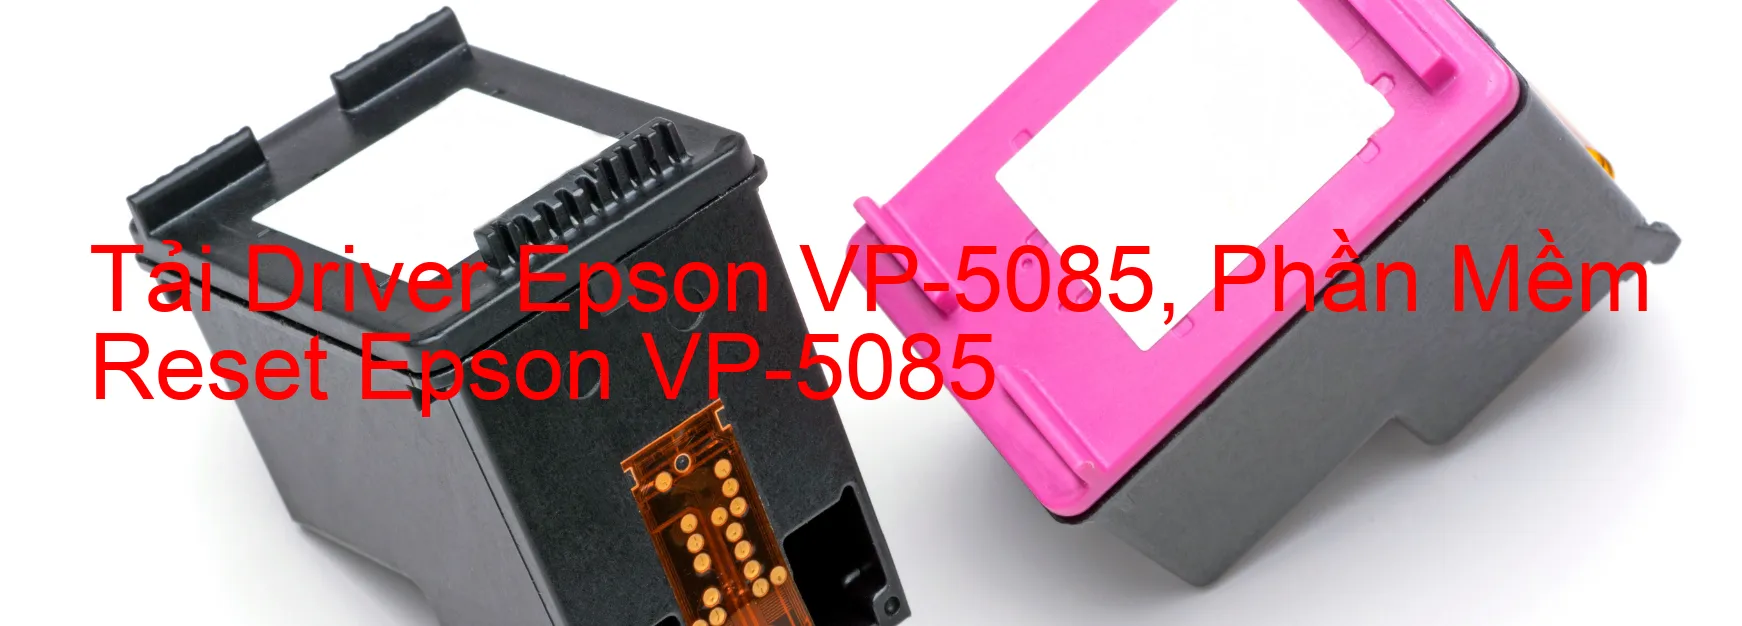 Driver Epson VP-5085, Phần Mềm Reset Epson VP-5085